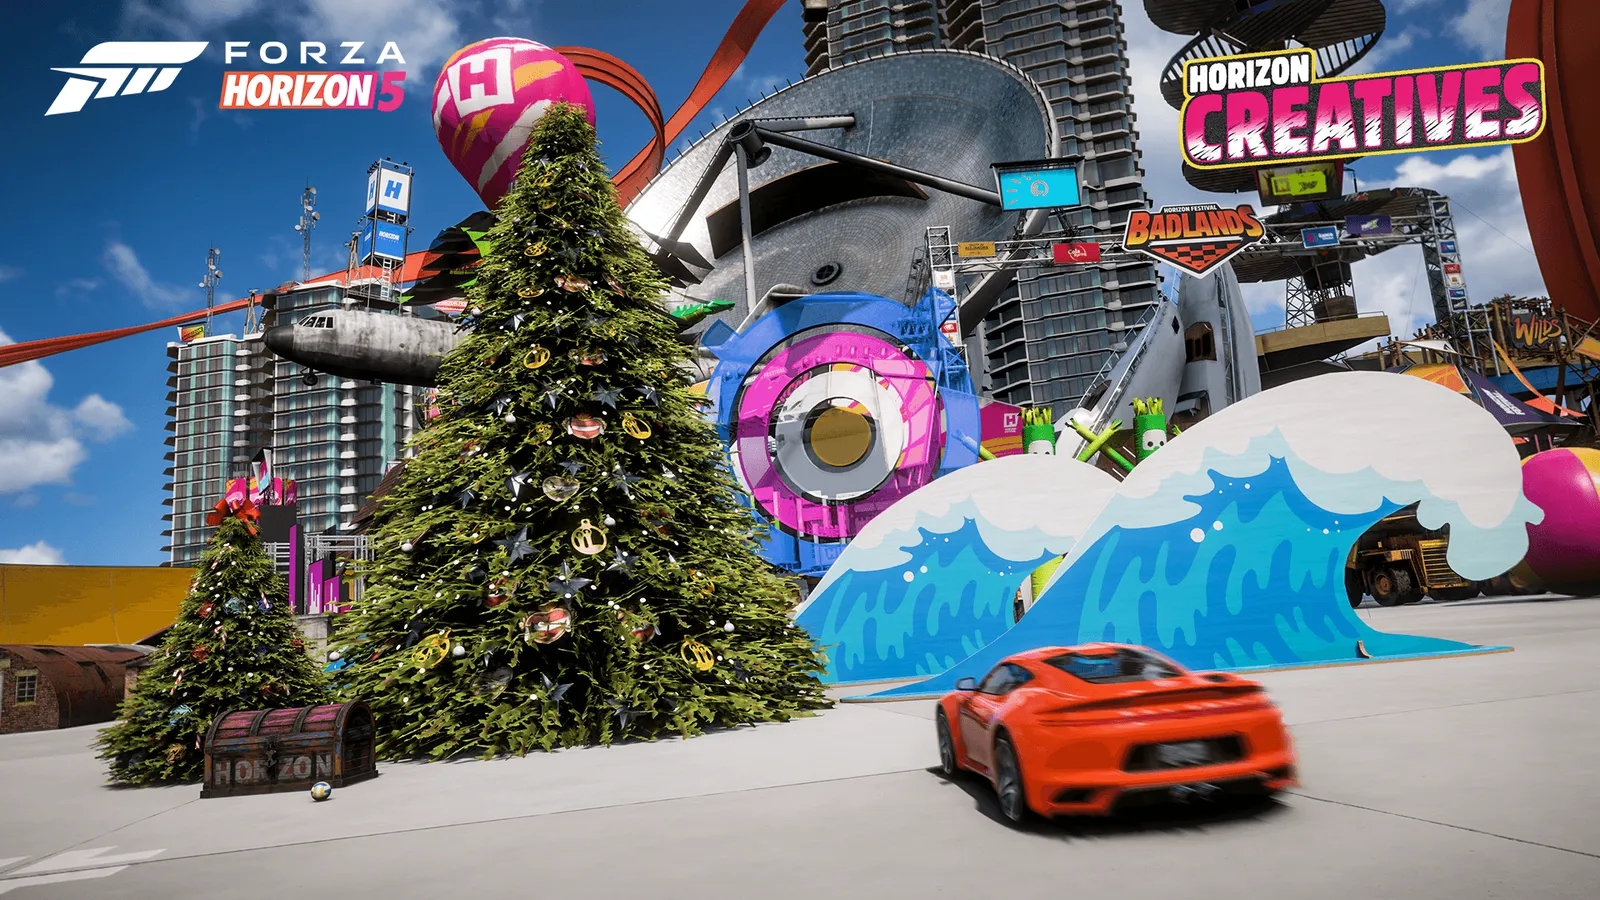 Forza Horizon 5: aggiornamento Horizon Creatives annunciato in video con EventLab 2.0